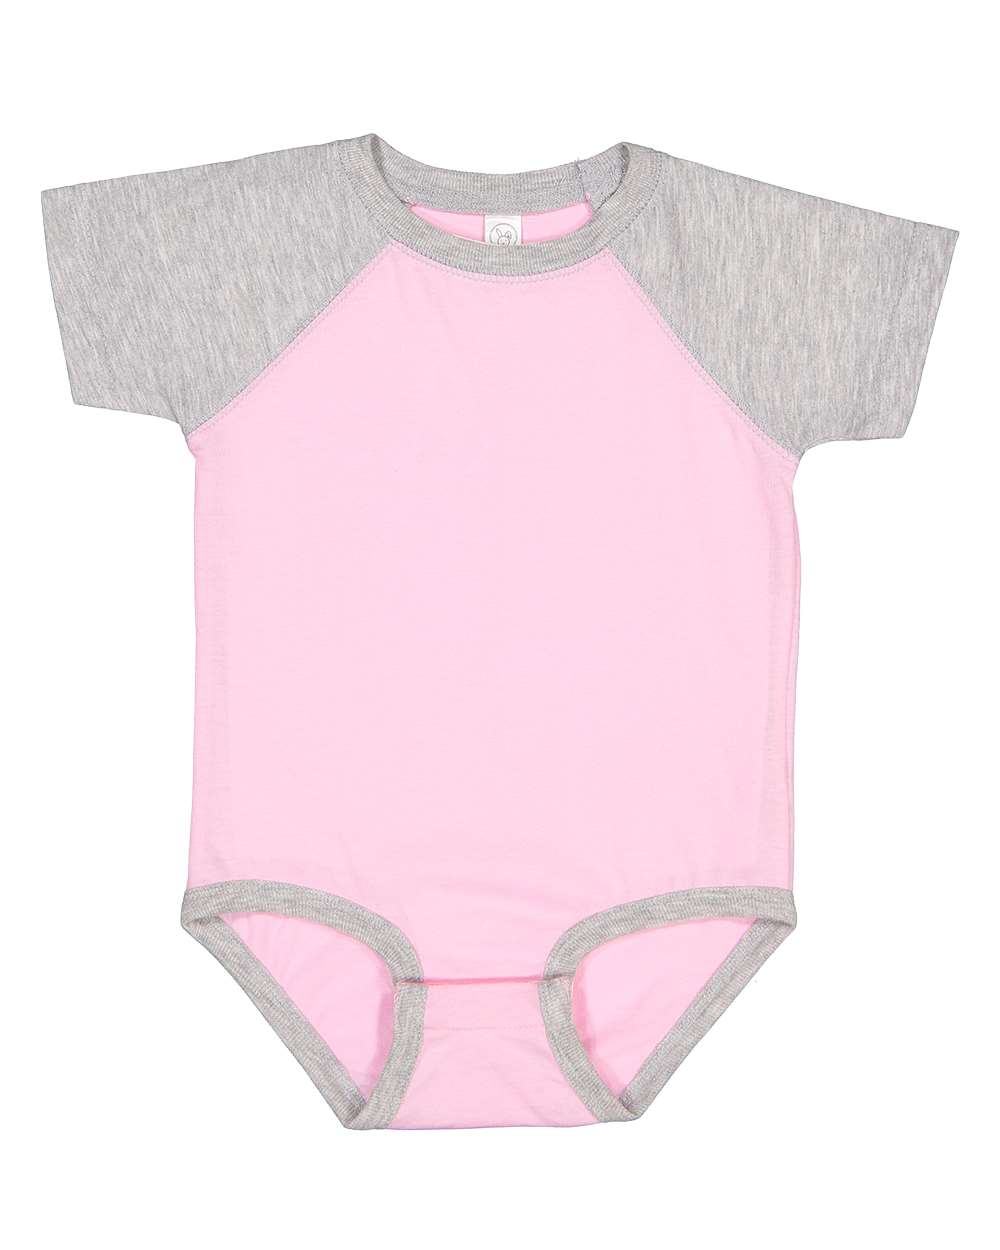 rabbit skins infant baseball jersey bodysuit onesie pink vintage heather grey